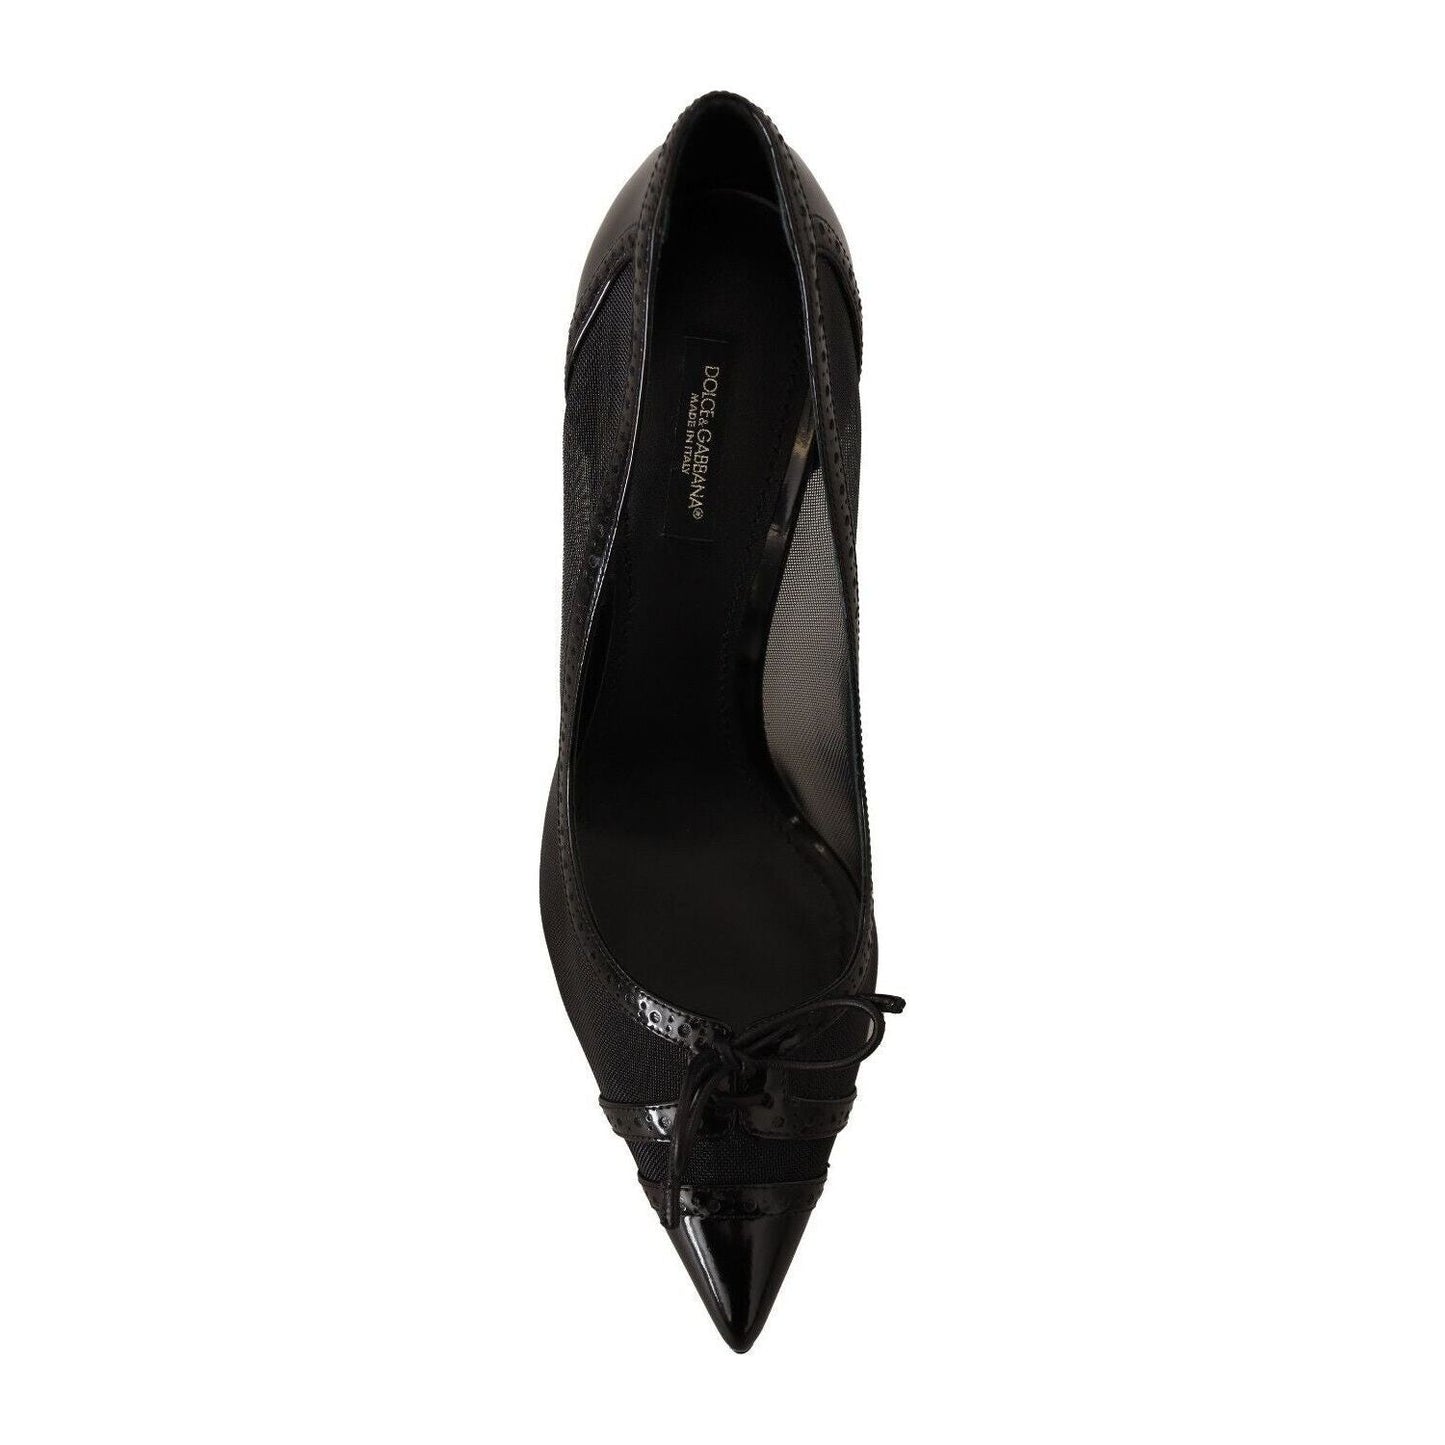 Dolce & Gabbana Elegant Black Mesh Stiletto Pumps black-mesh-leather-pointed-heels-pumps-shoes